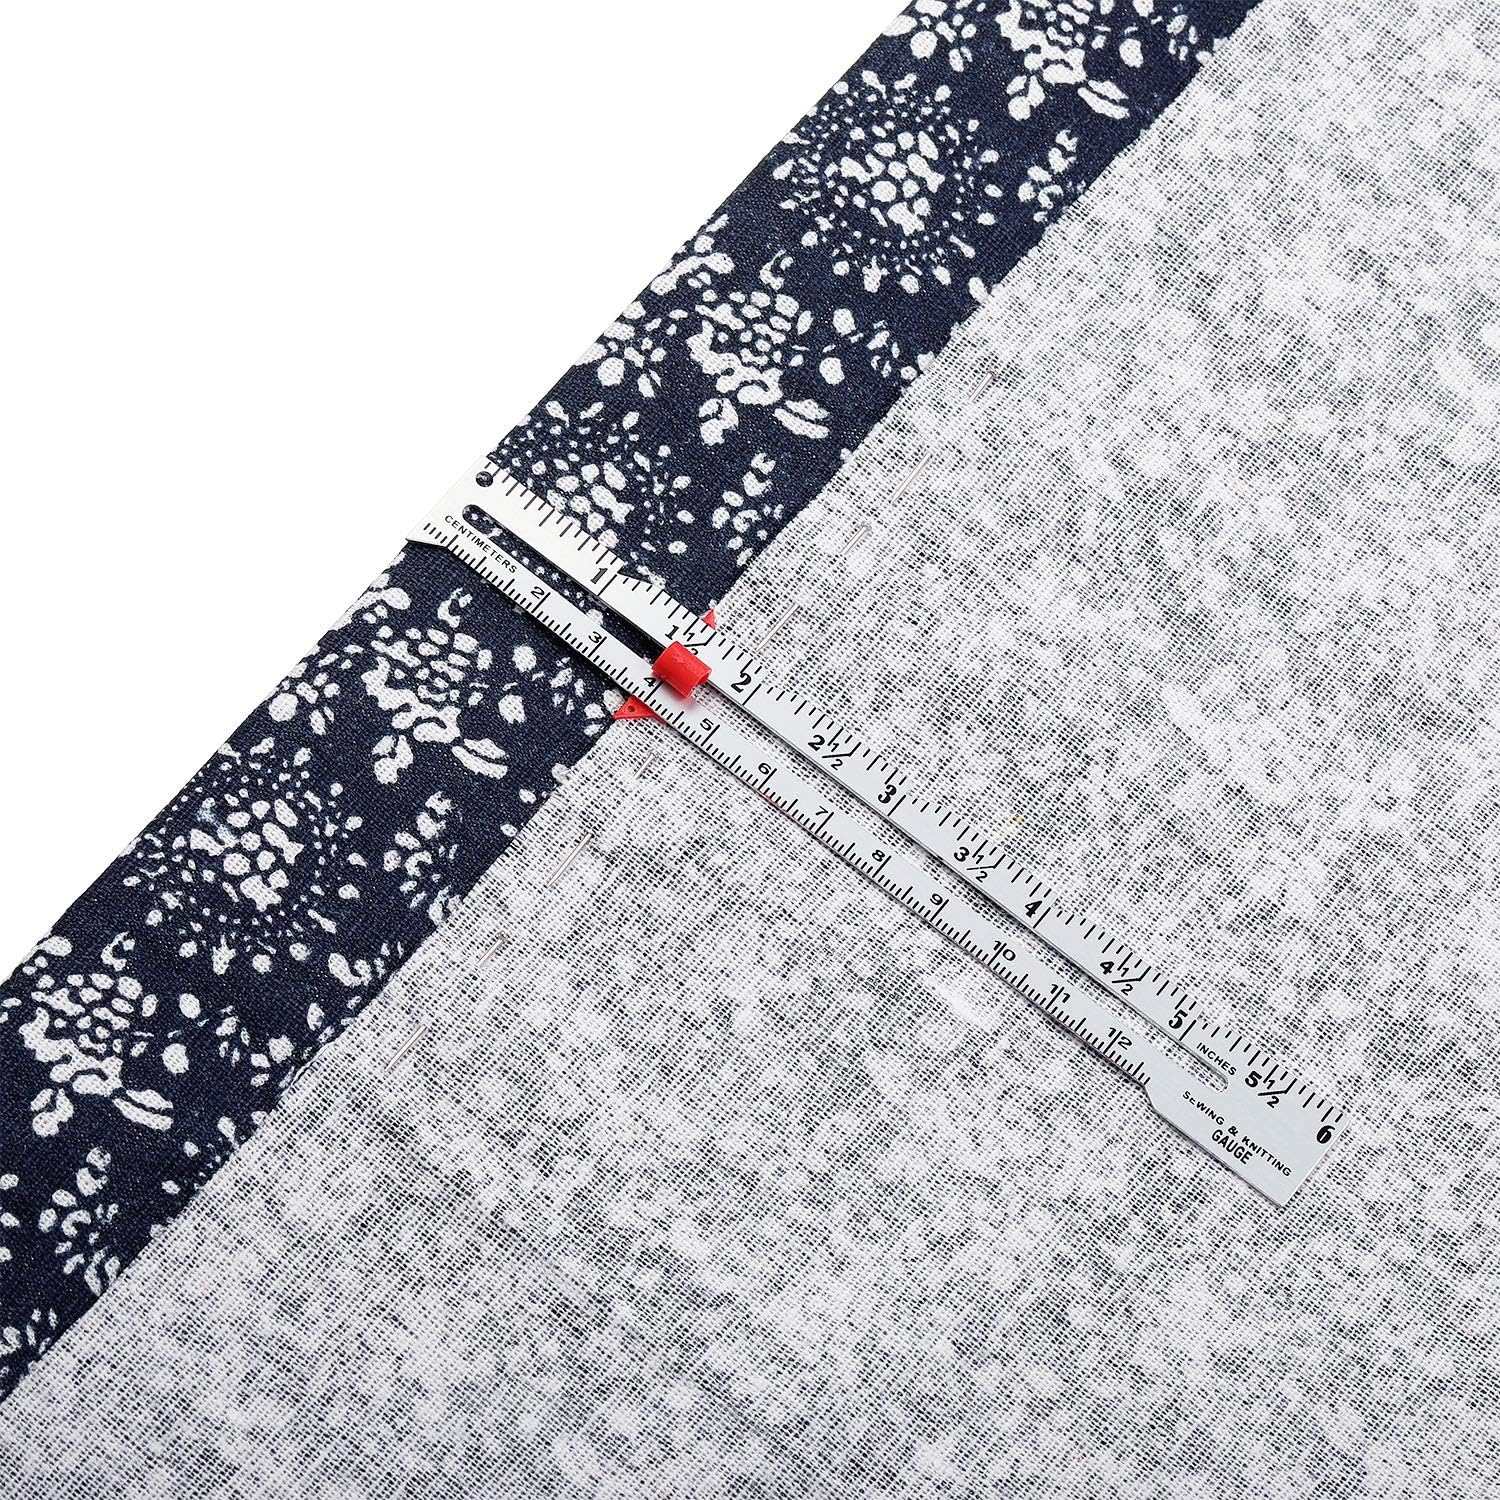 3Pcs Sewing Gauge Measuring Tool Fabric Quilting Ruler